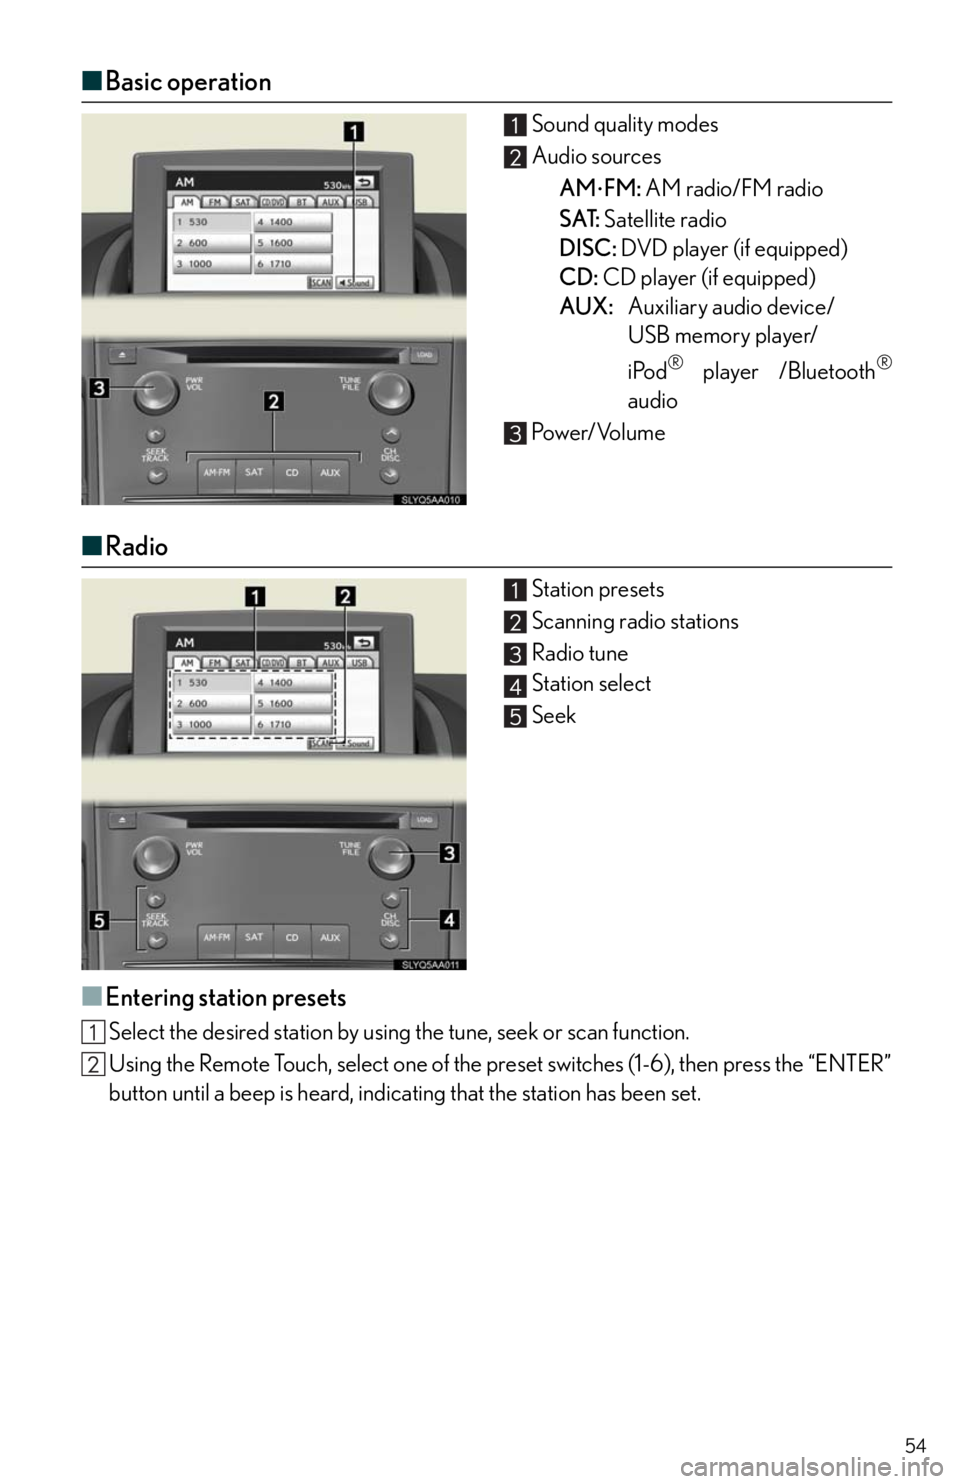 Lexus HS250h 2010  Setup / LEXUS 2010 HS250H QUICK GUIDE OWNERS MANUAL (OM75023U) 54
■Basic operation
Sound quality modes
Audio sources
AM
FM: AM radio/FM radio
SAT: Satellite radio
DISC: DVD player (if equipped)
CD: CD player (if equipped)
AUX:Auxiliary audio device/
USB memo